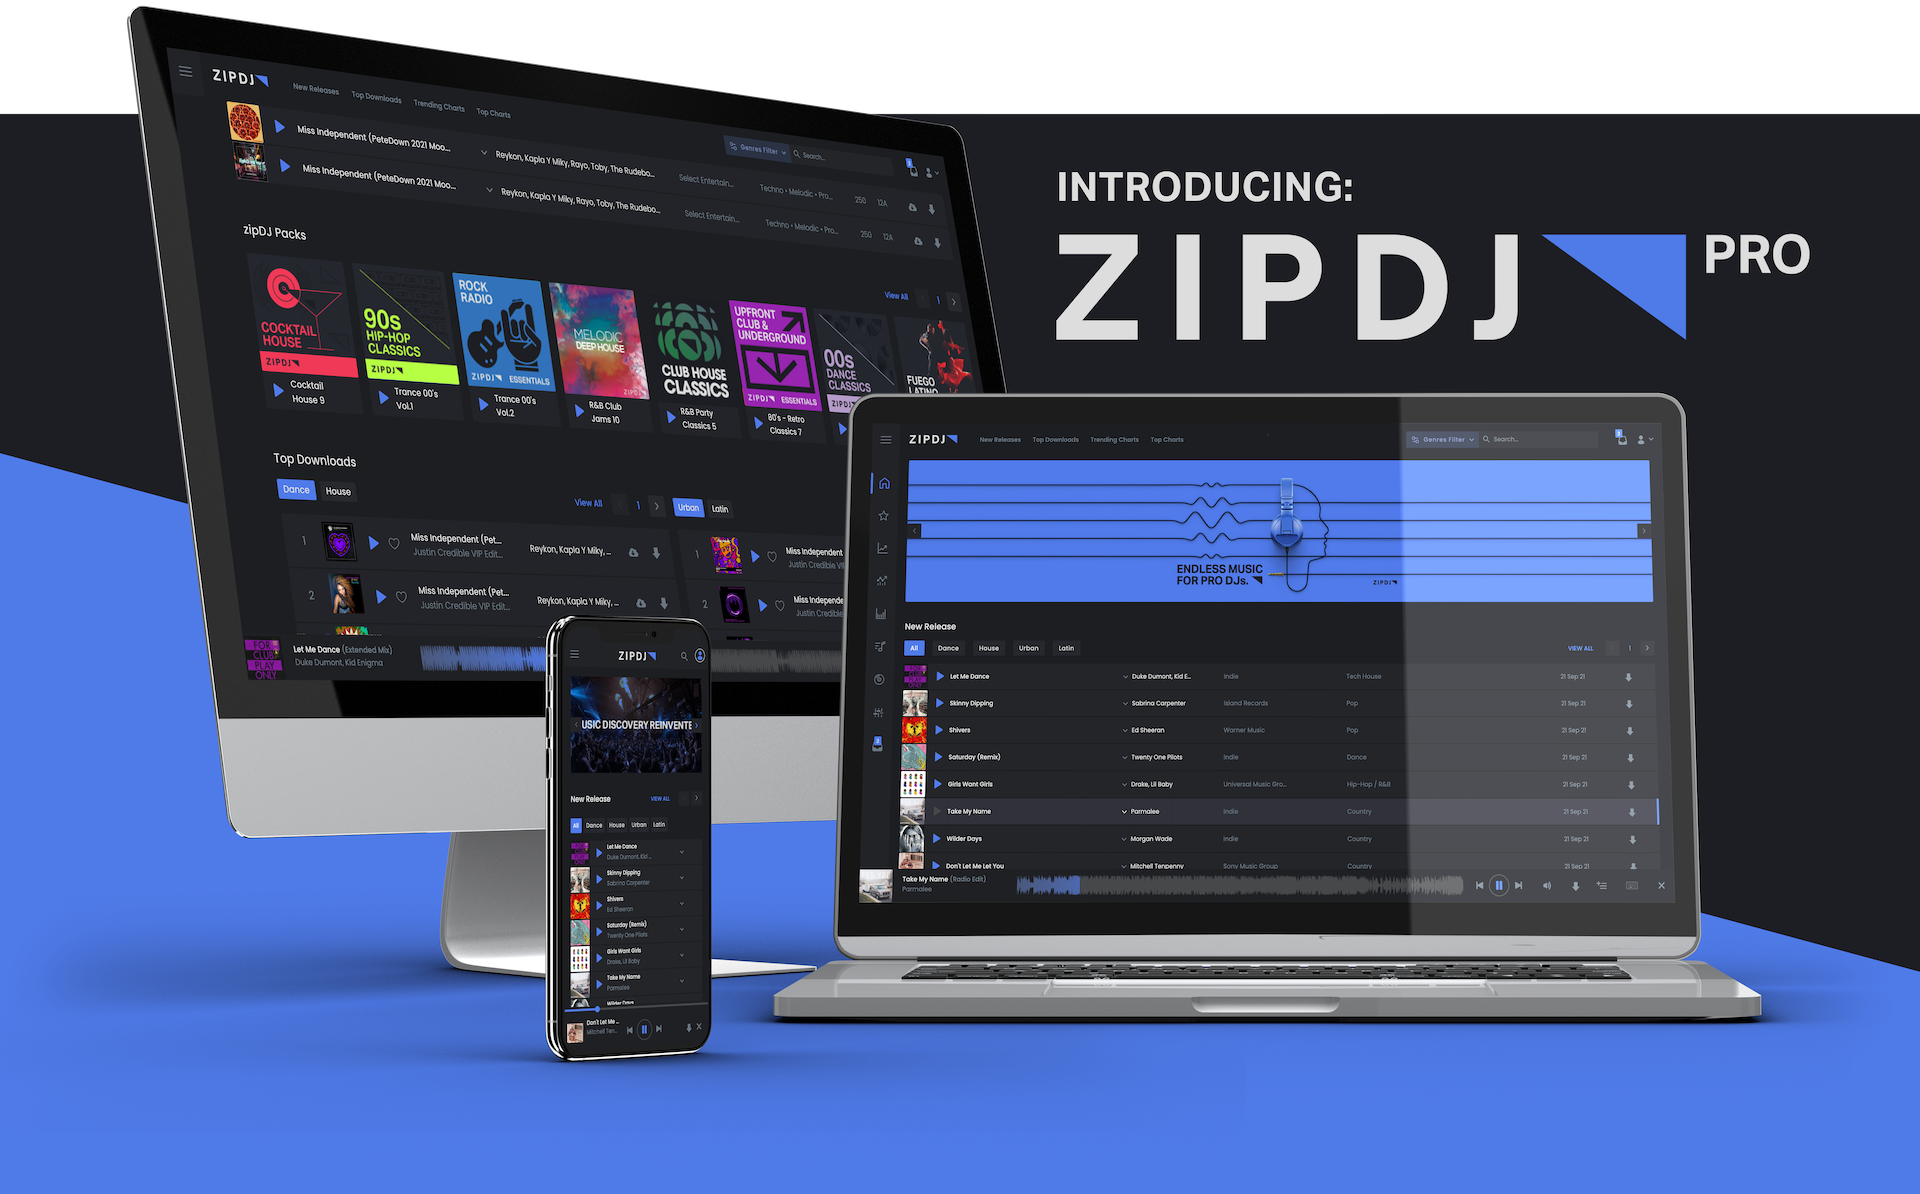 ZIPDJ - Introducing ZIPDJ PRO